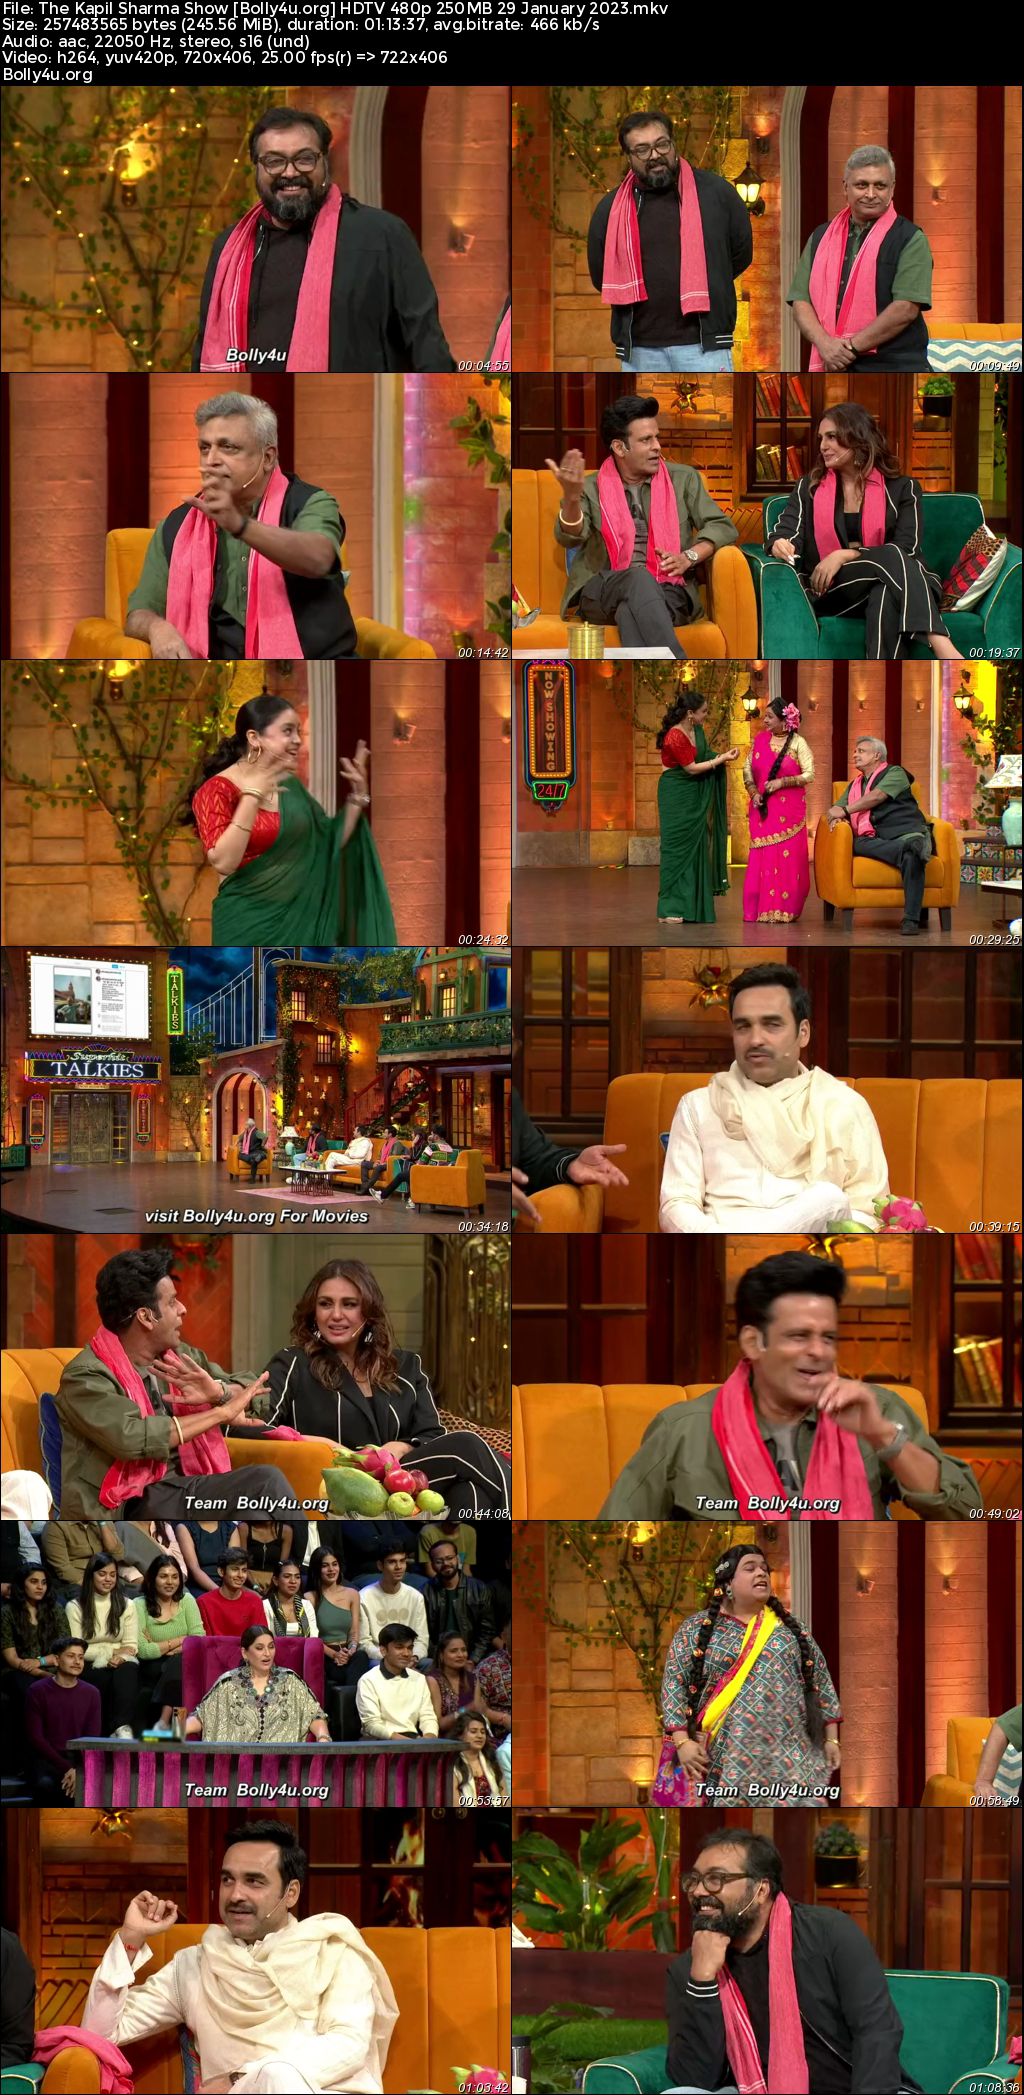 The Kapil Sharma Show HDTV 480p 250MB 29 January 2023 Download